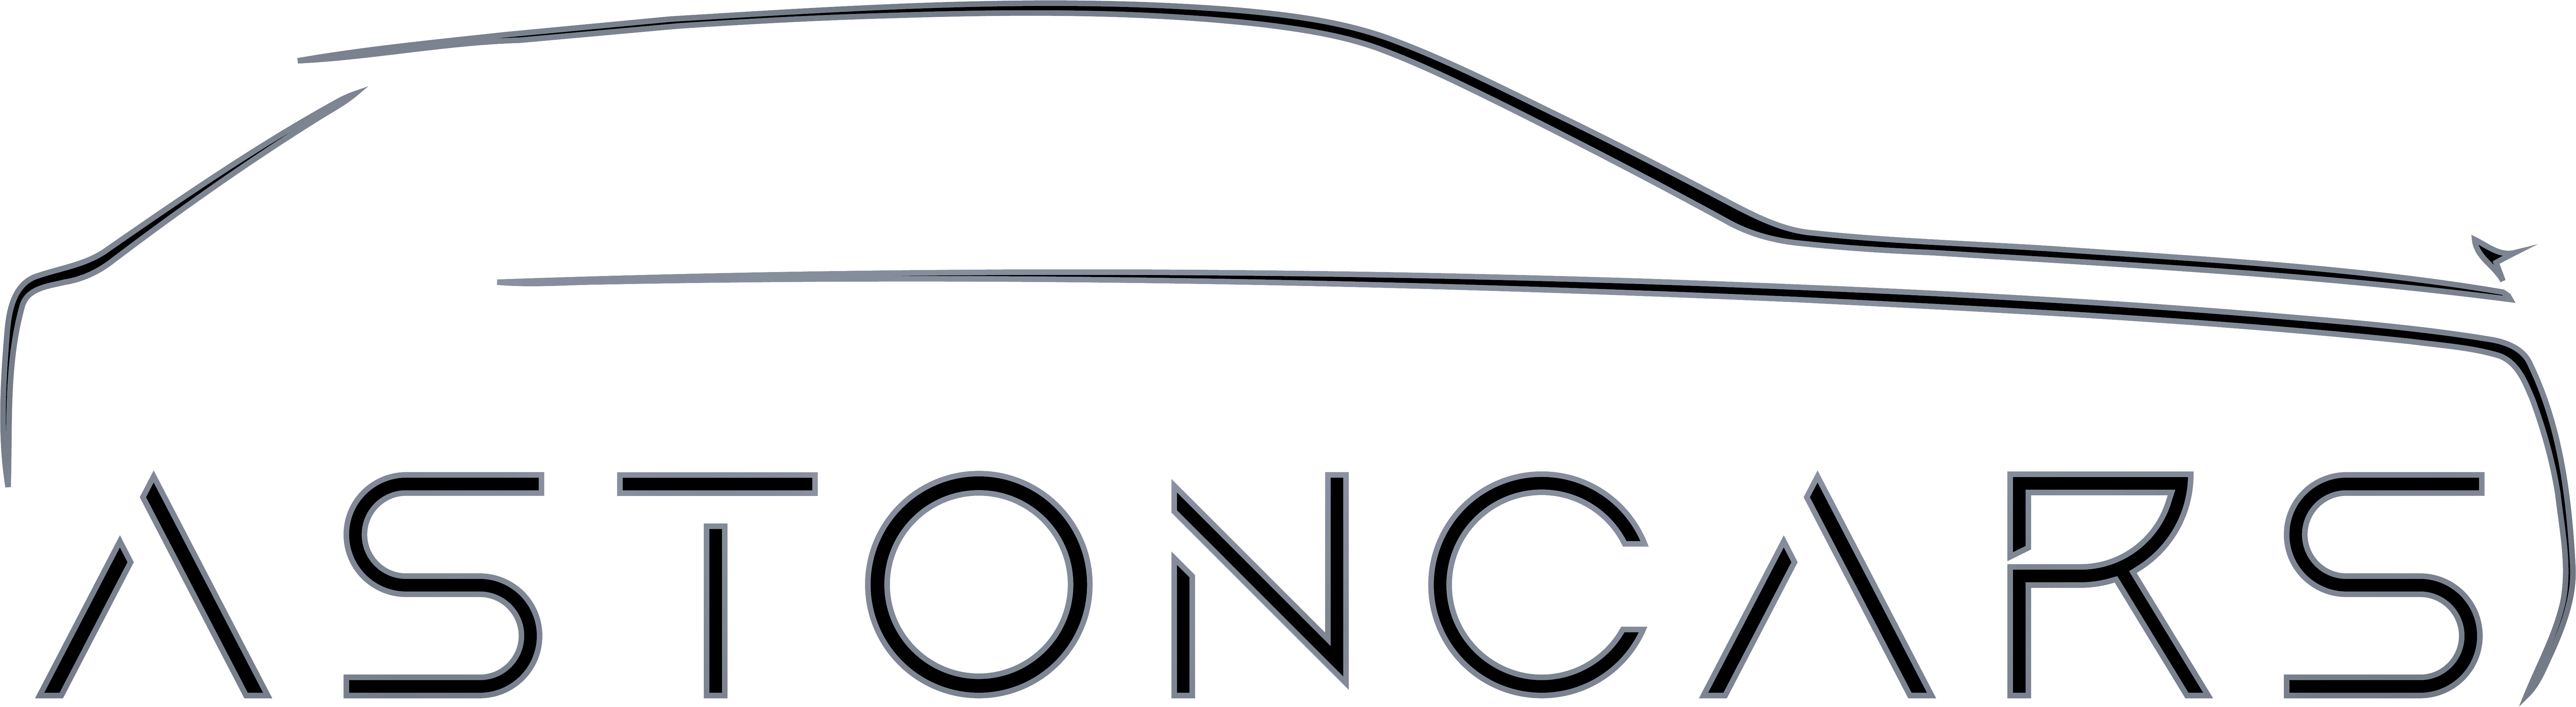 Aston Cars logo